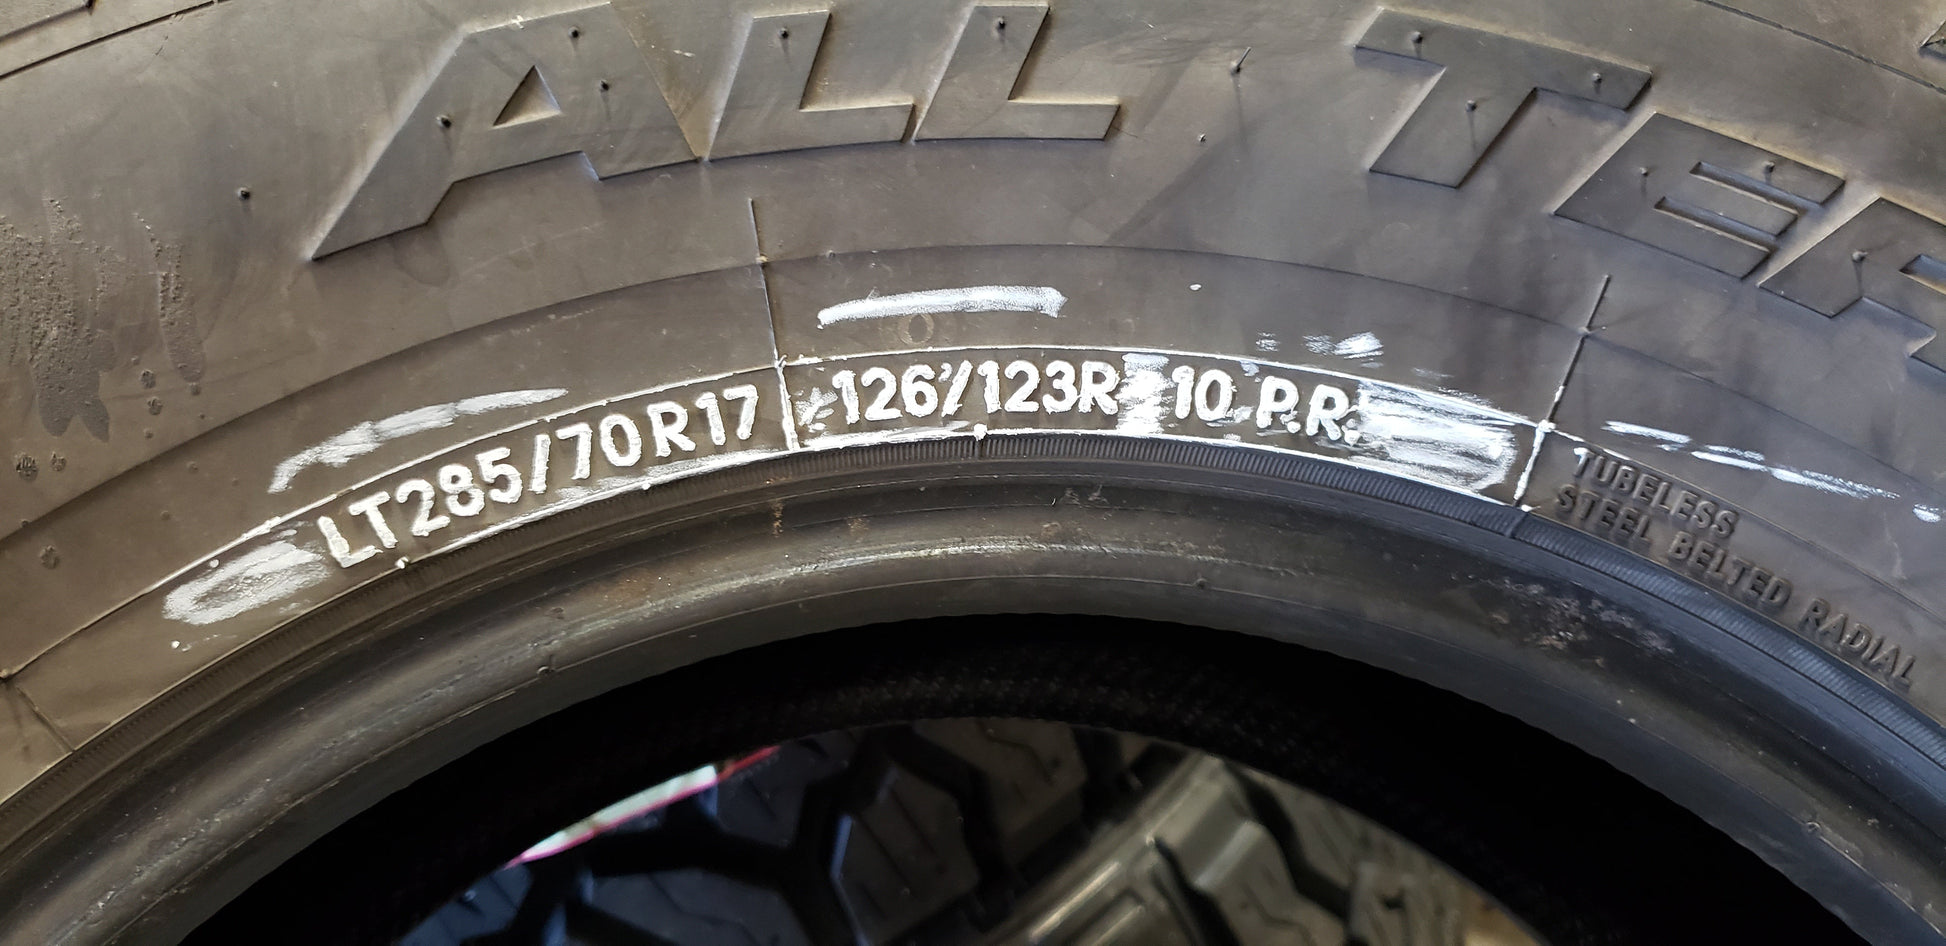 SINGLE 285/70R17 Nitto Terra Grappler 126/123 R E - Used Tires